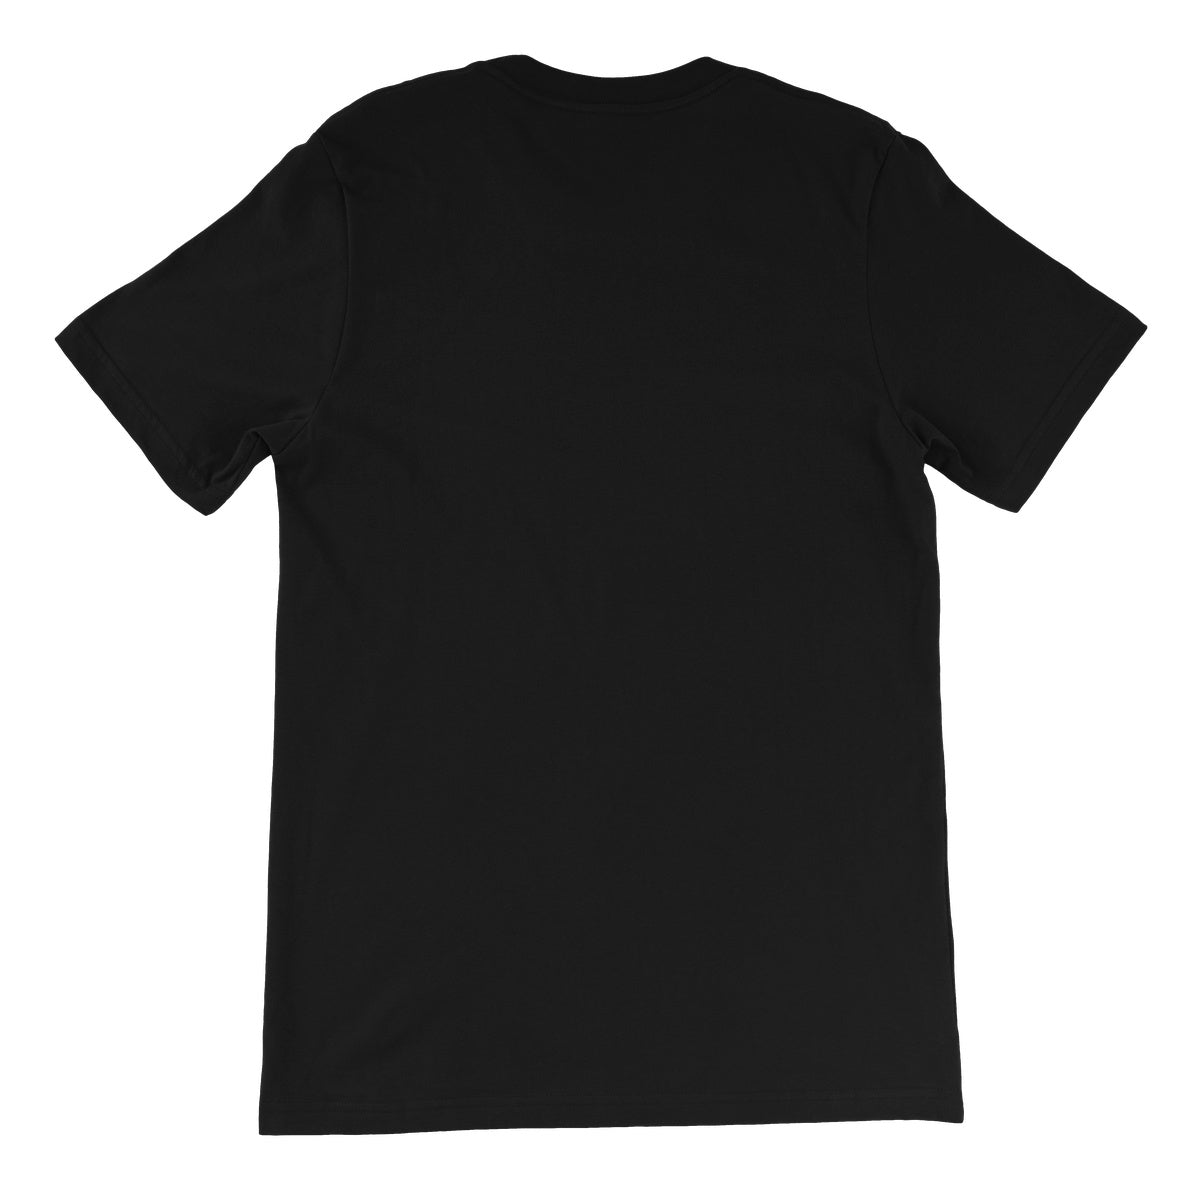 CxE Wrestler At Large Unisex Short Sleeve T-Shirt